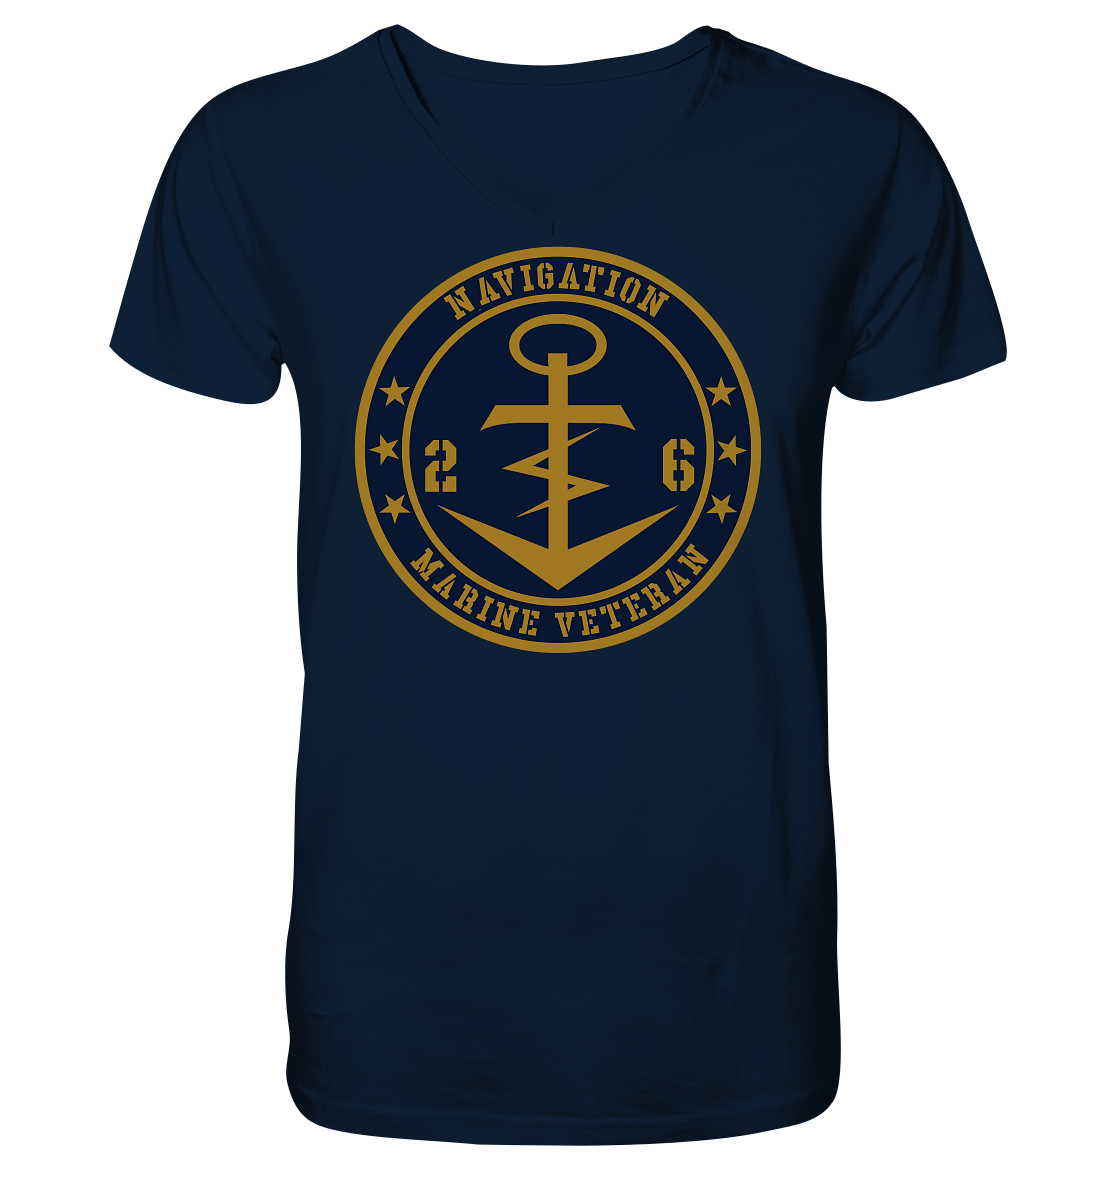 Marine Veteran 26er NAVIGATION - Mens Organic V-Neck Shirt